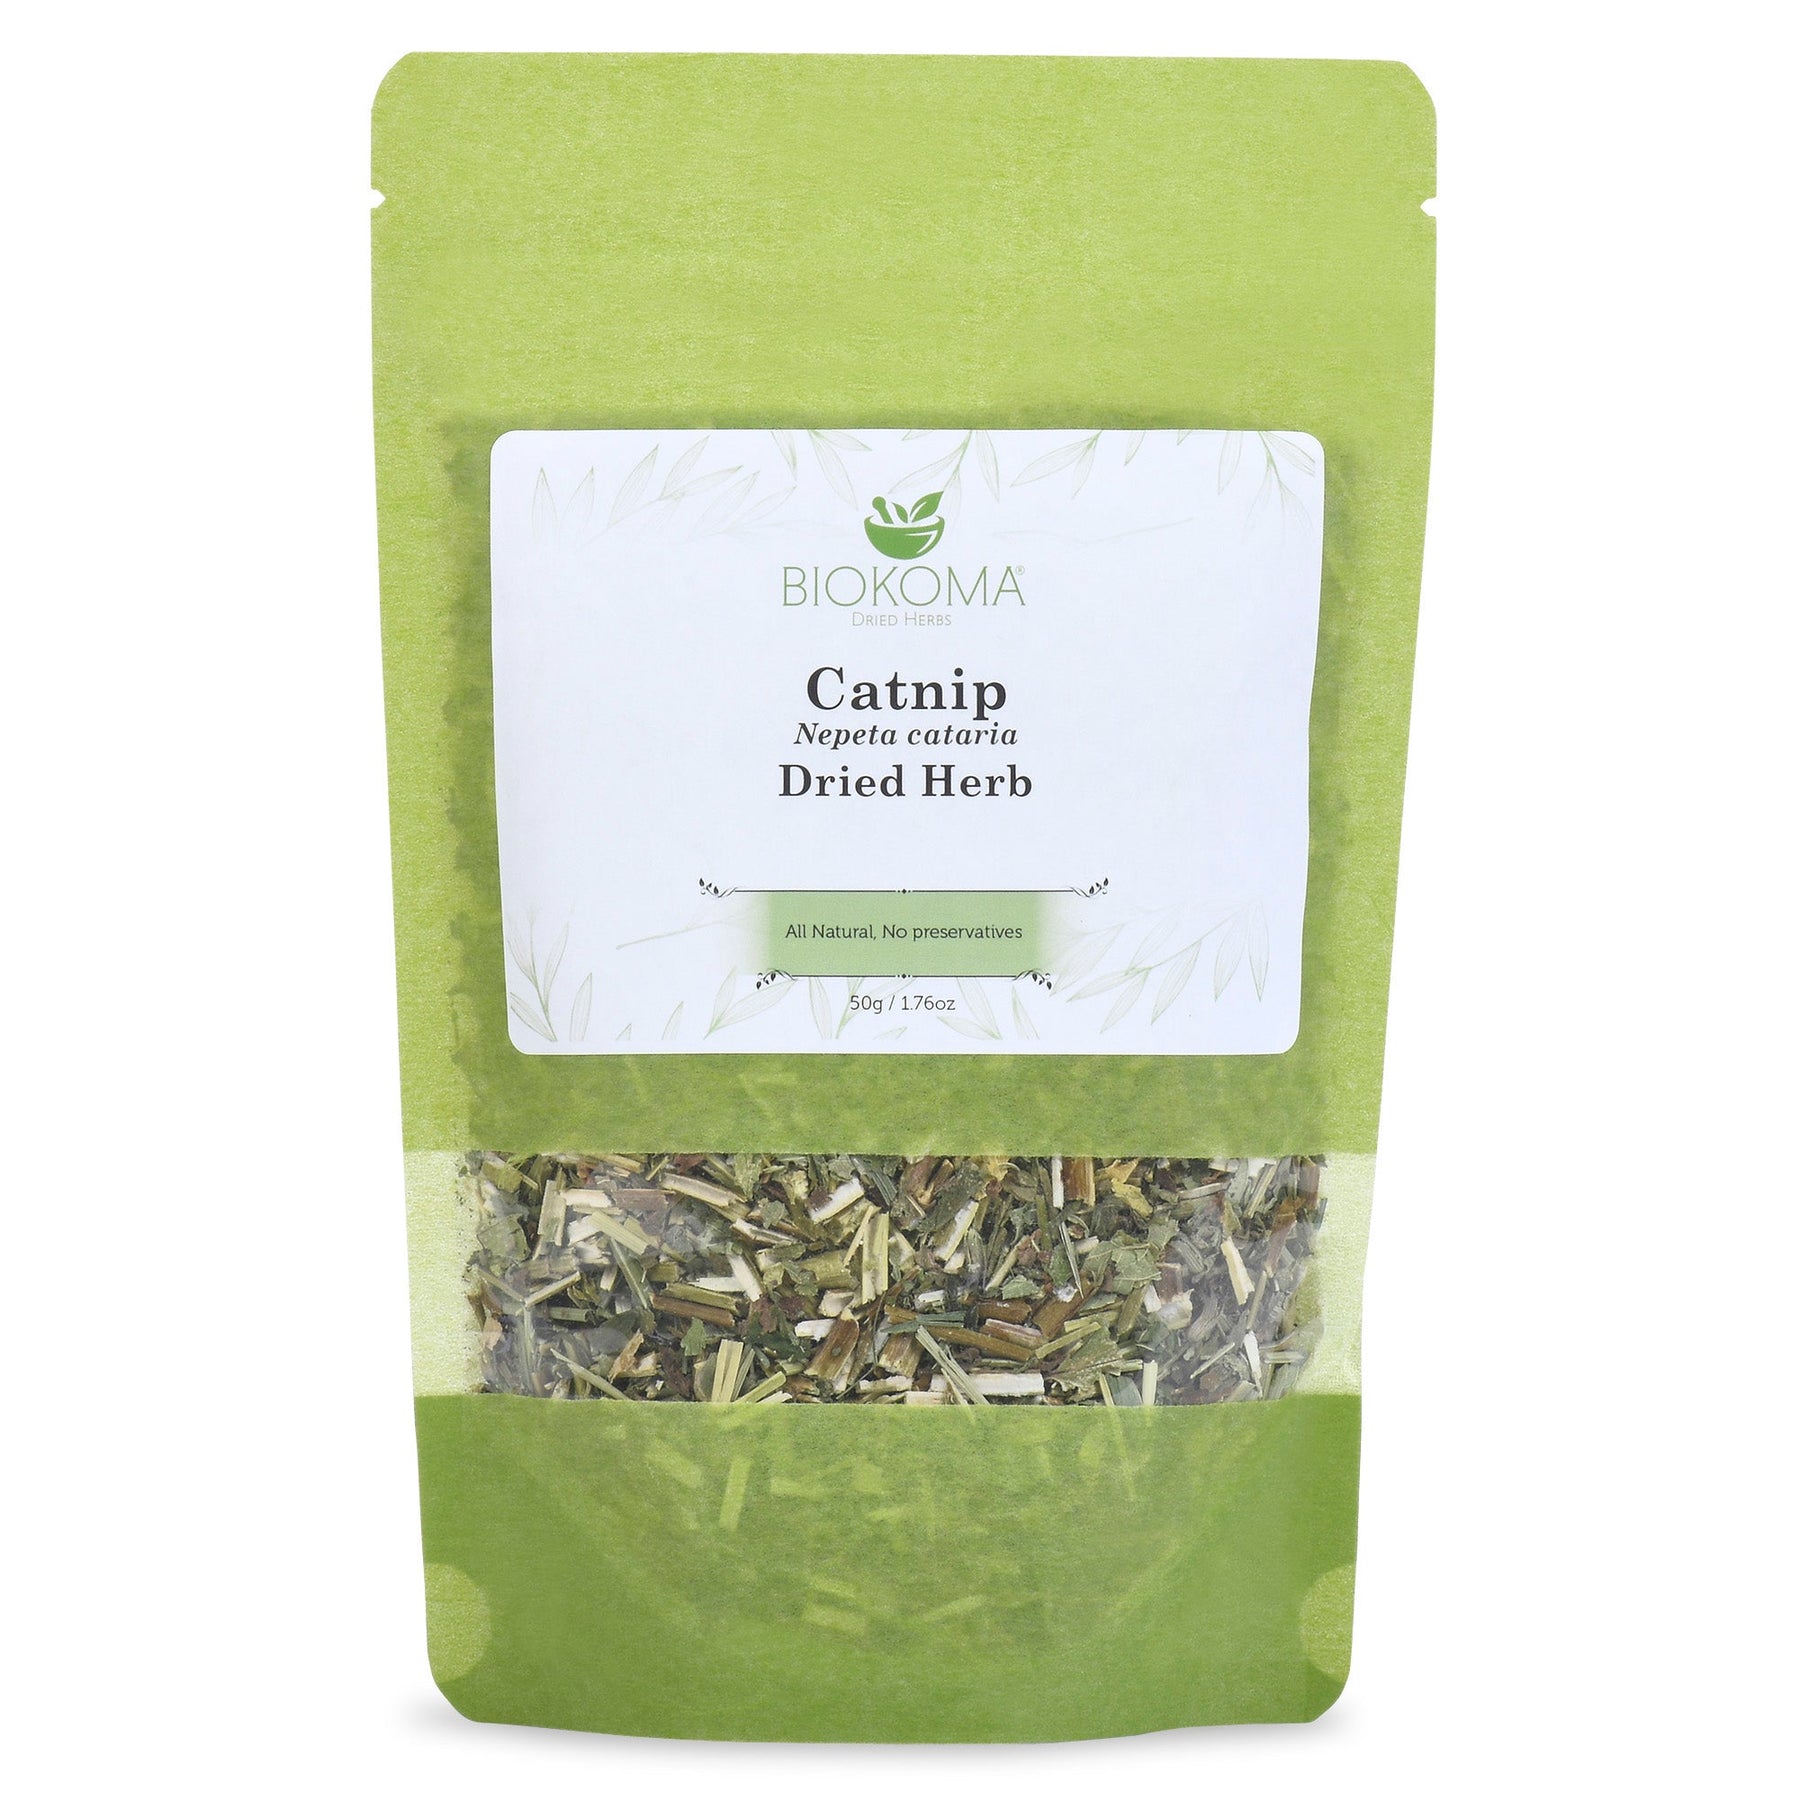 Biokoma Catnip (Nepeta cataria) Dried Herb 50g 1.76oz